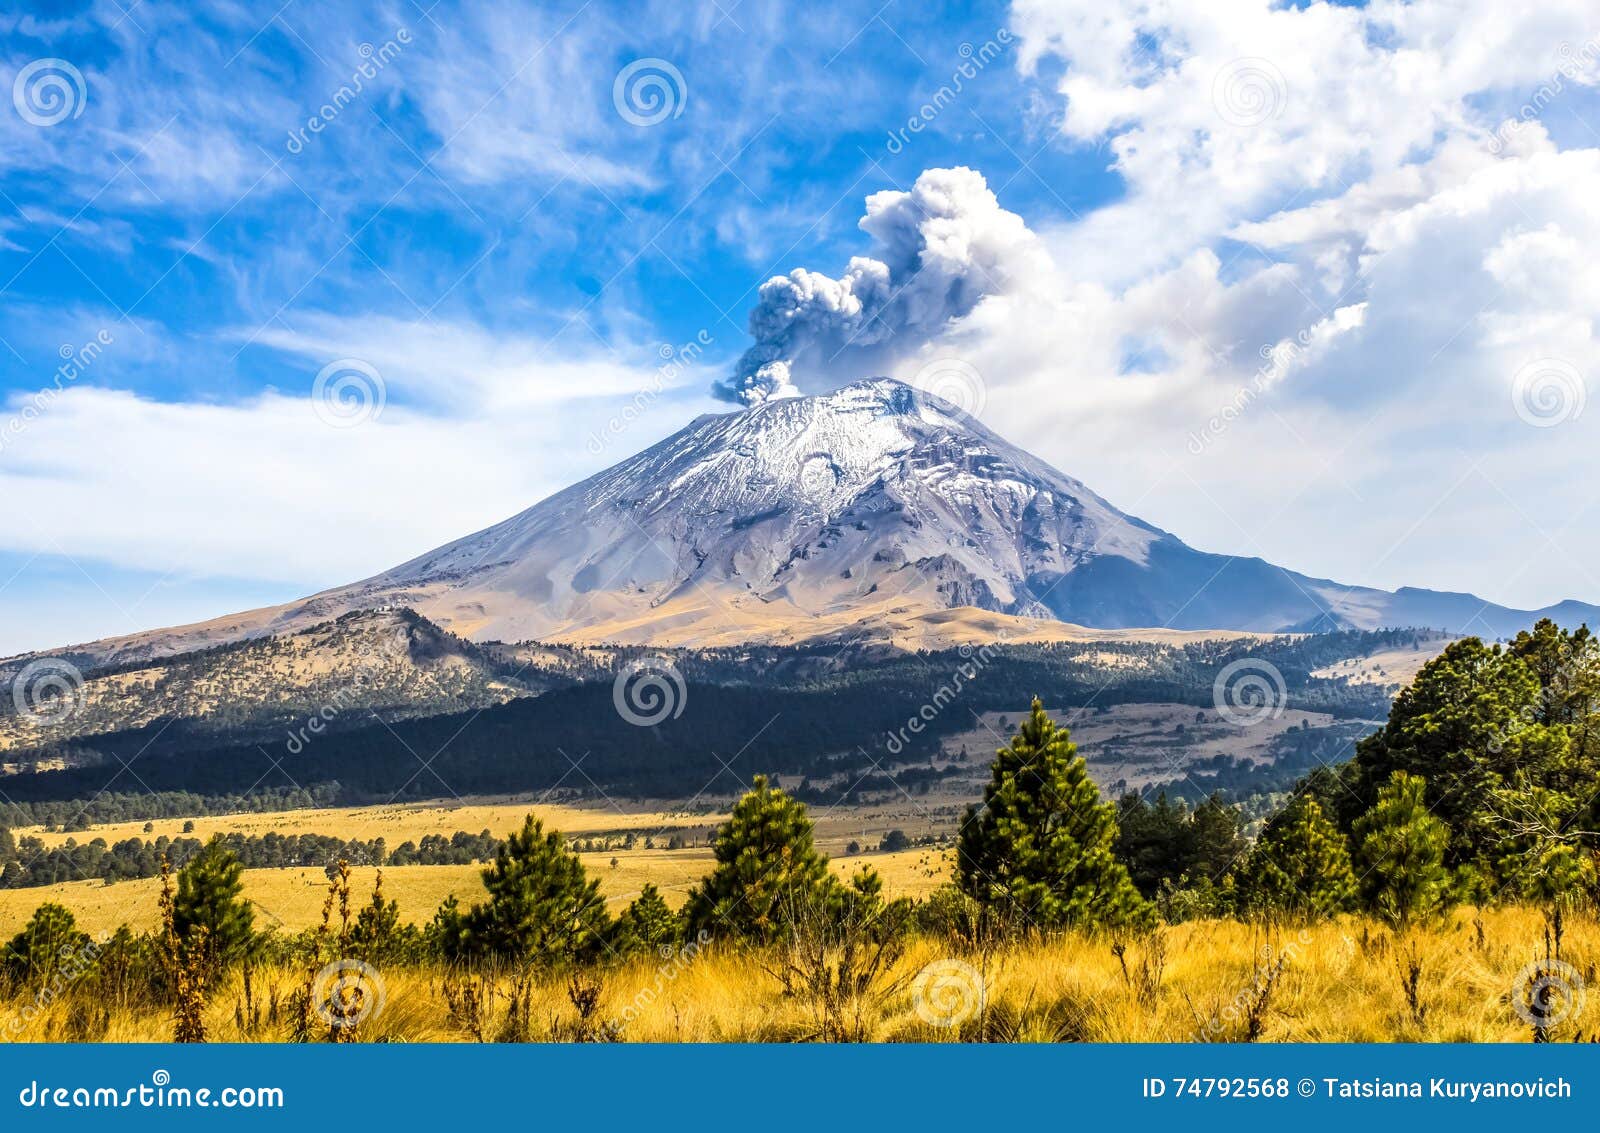 active popocatepetl volcano in mexico